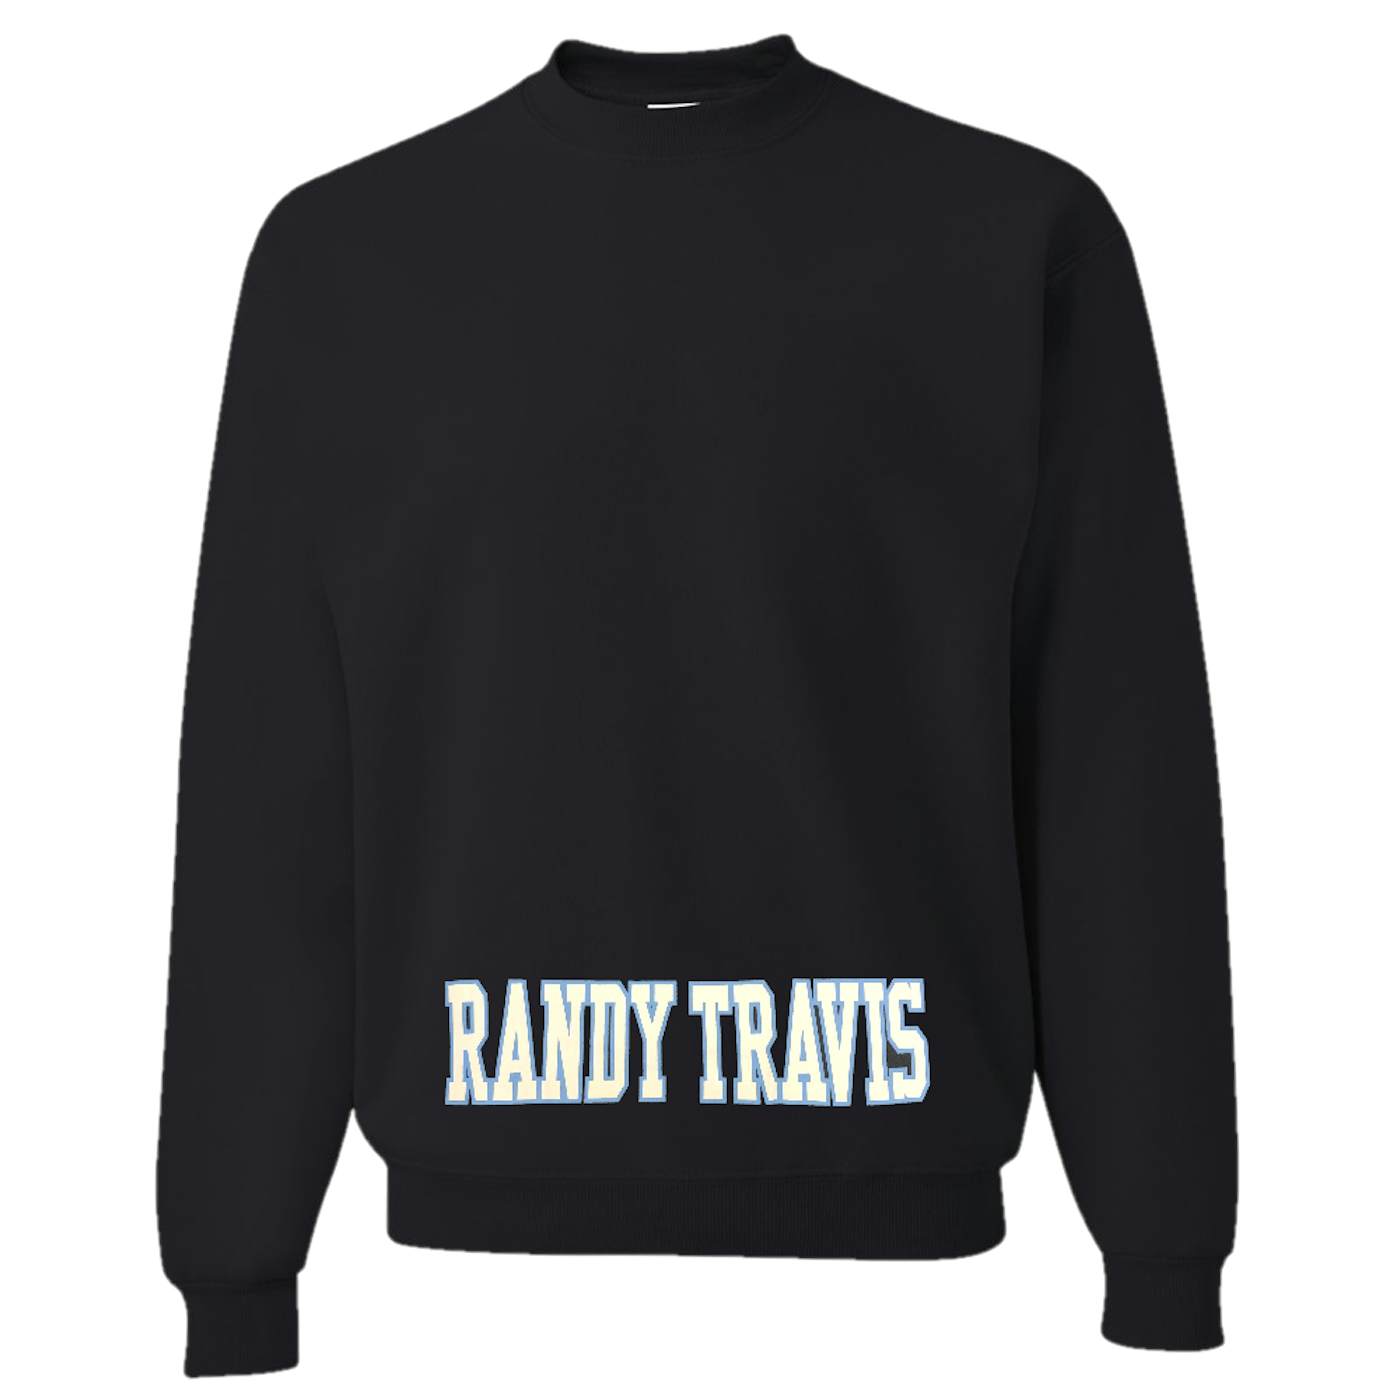 Randy Travis Black Crew Neck Sweatshirt